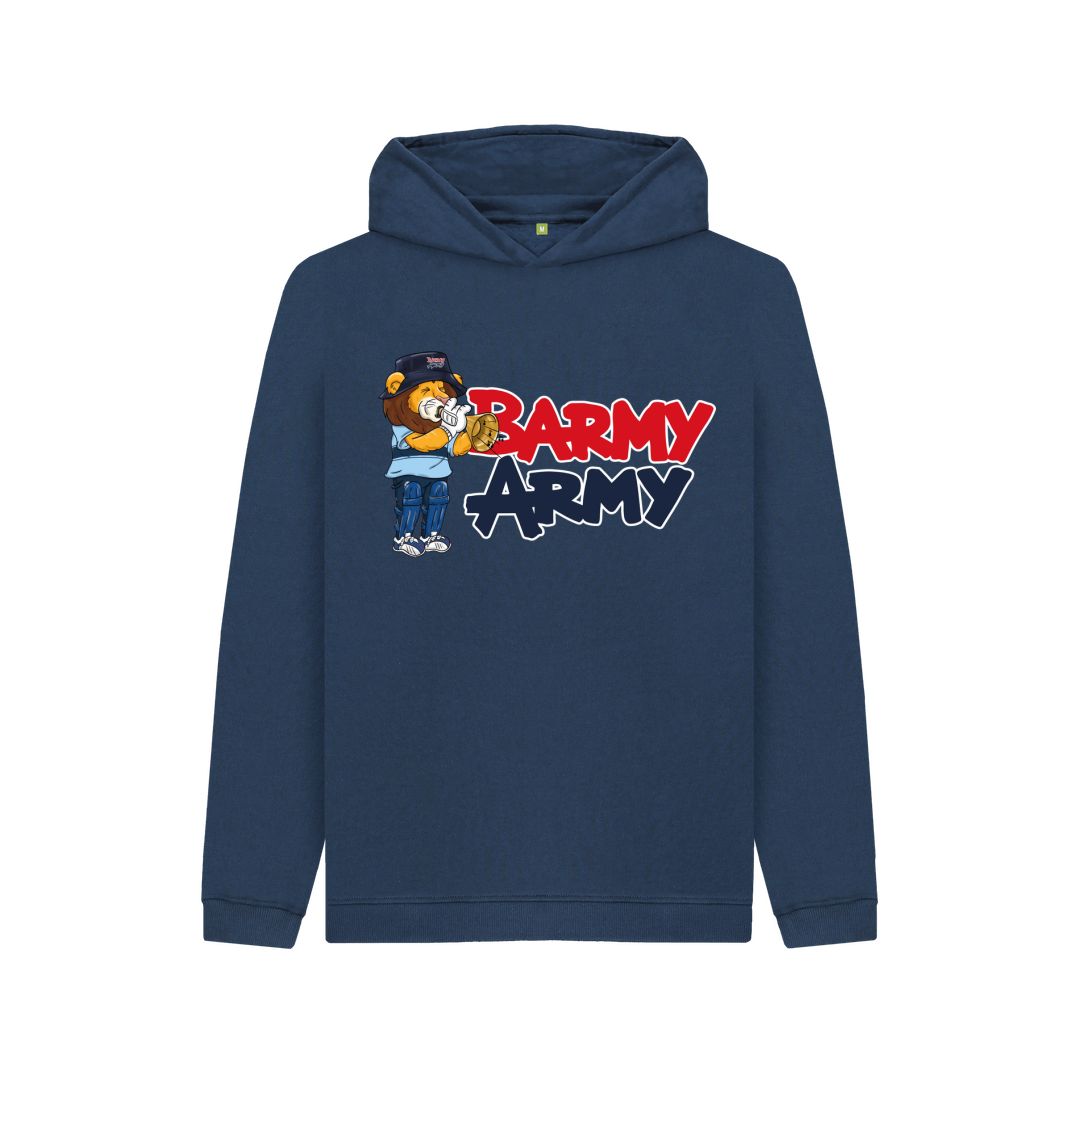 Navy Blue Barmy Army Trumpet Mascot Hoddy - Juniors